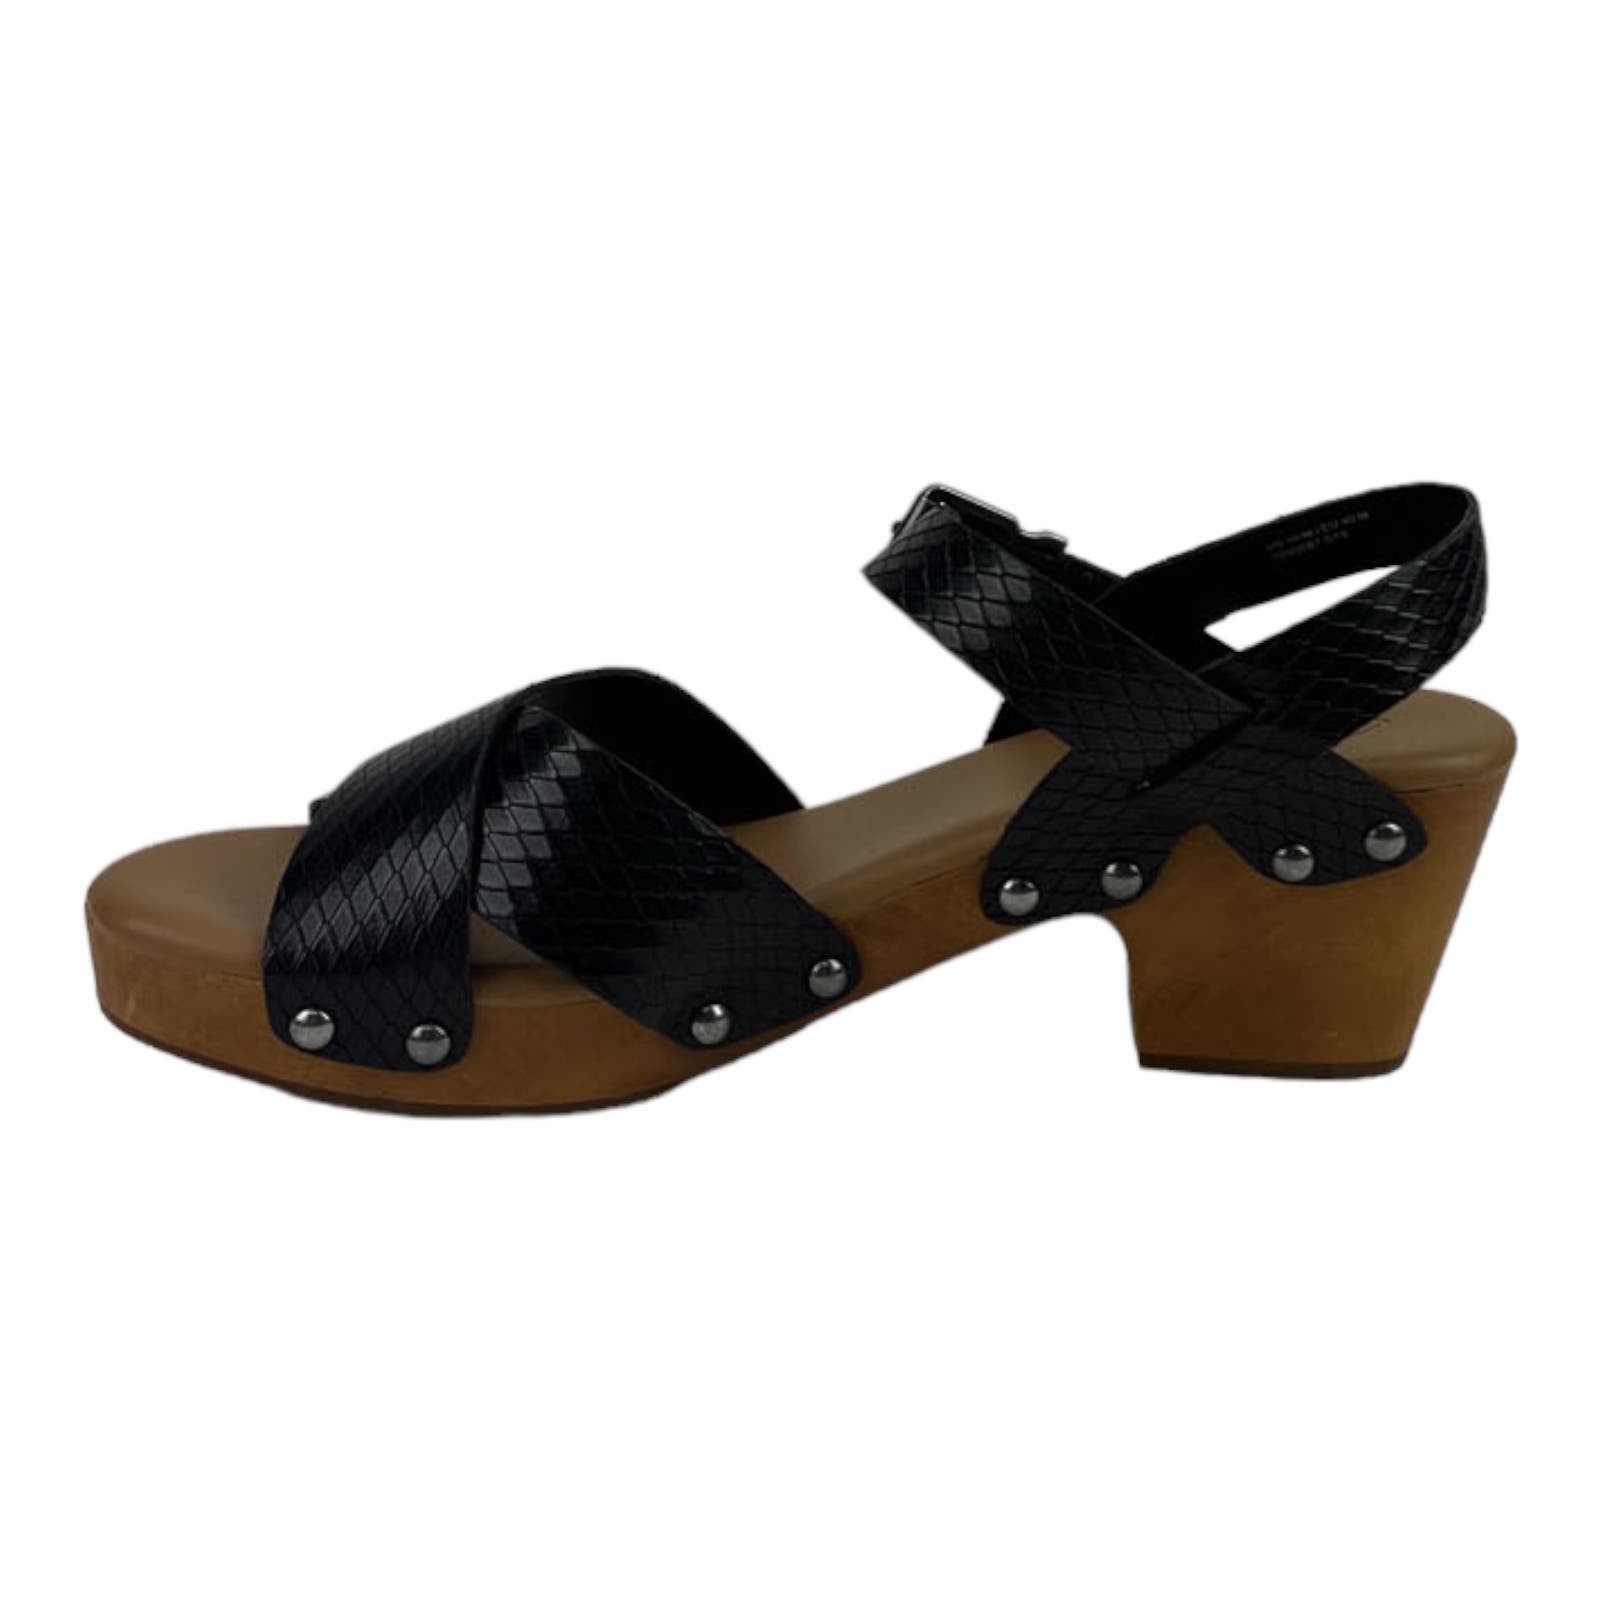 Patricia Nash Women US 10 Designs Gigi Wood Black Leather Sandals